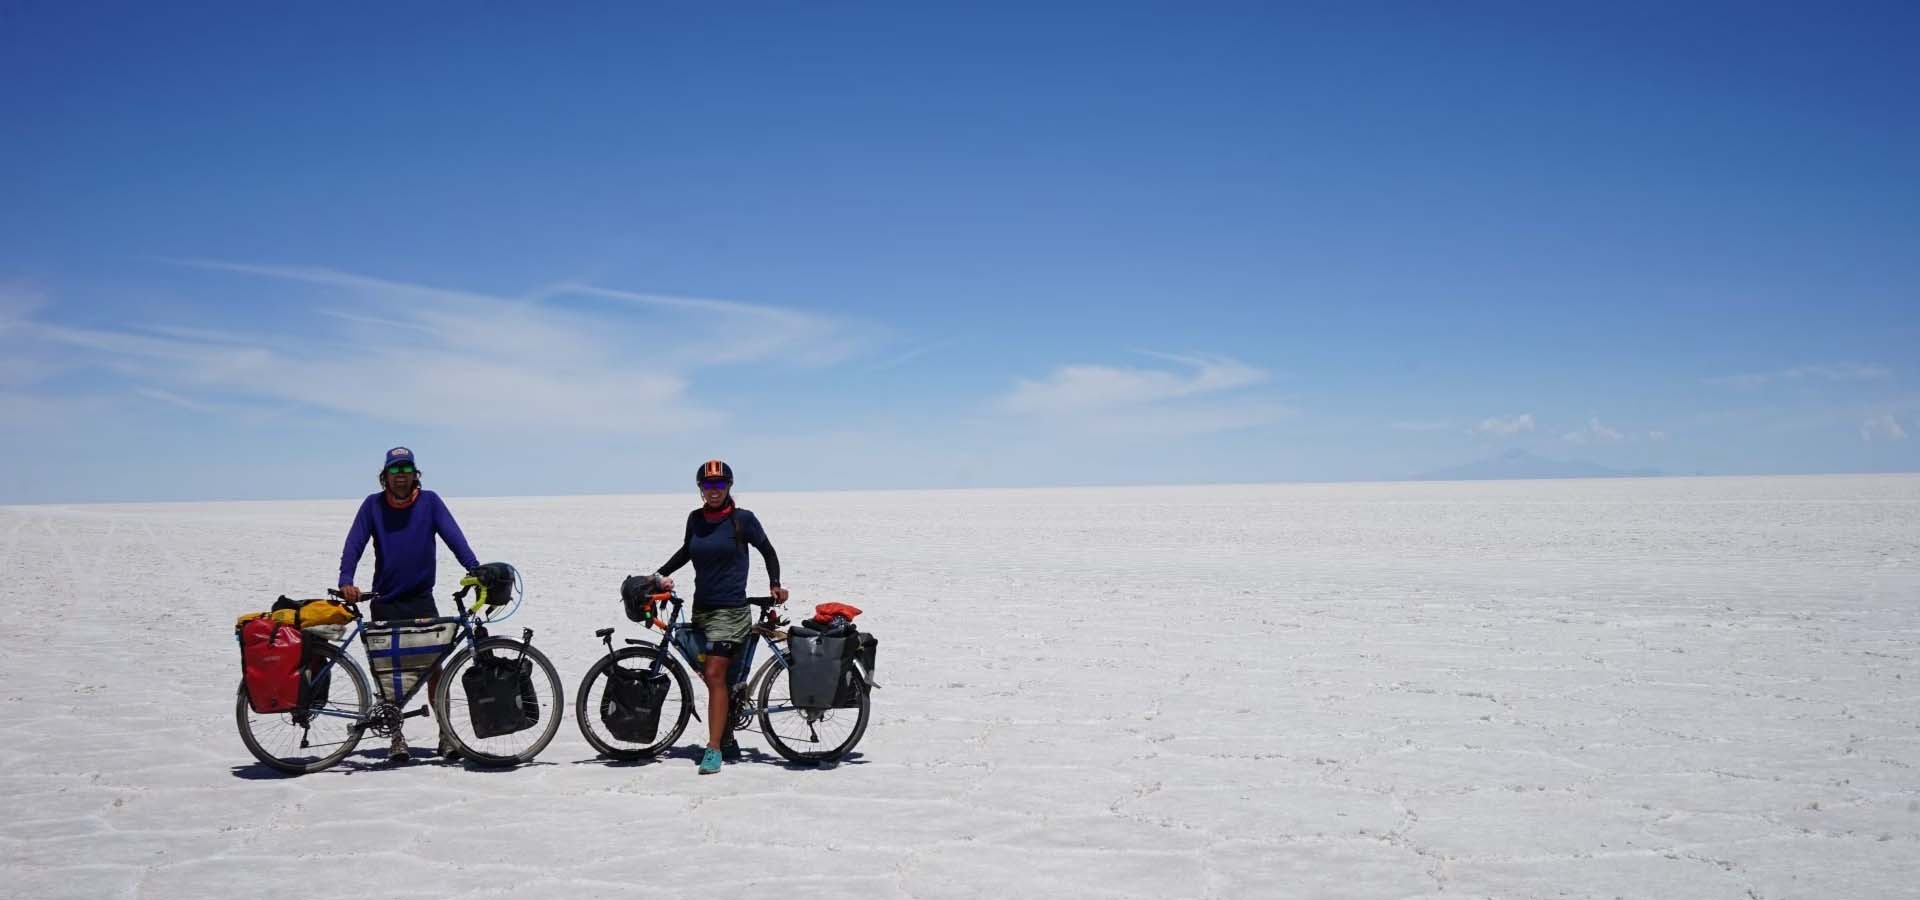 Two people riding bikes through a desert.